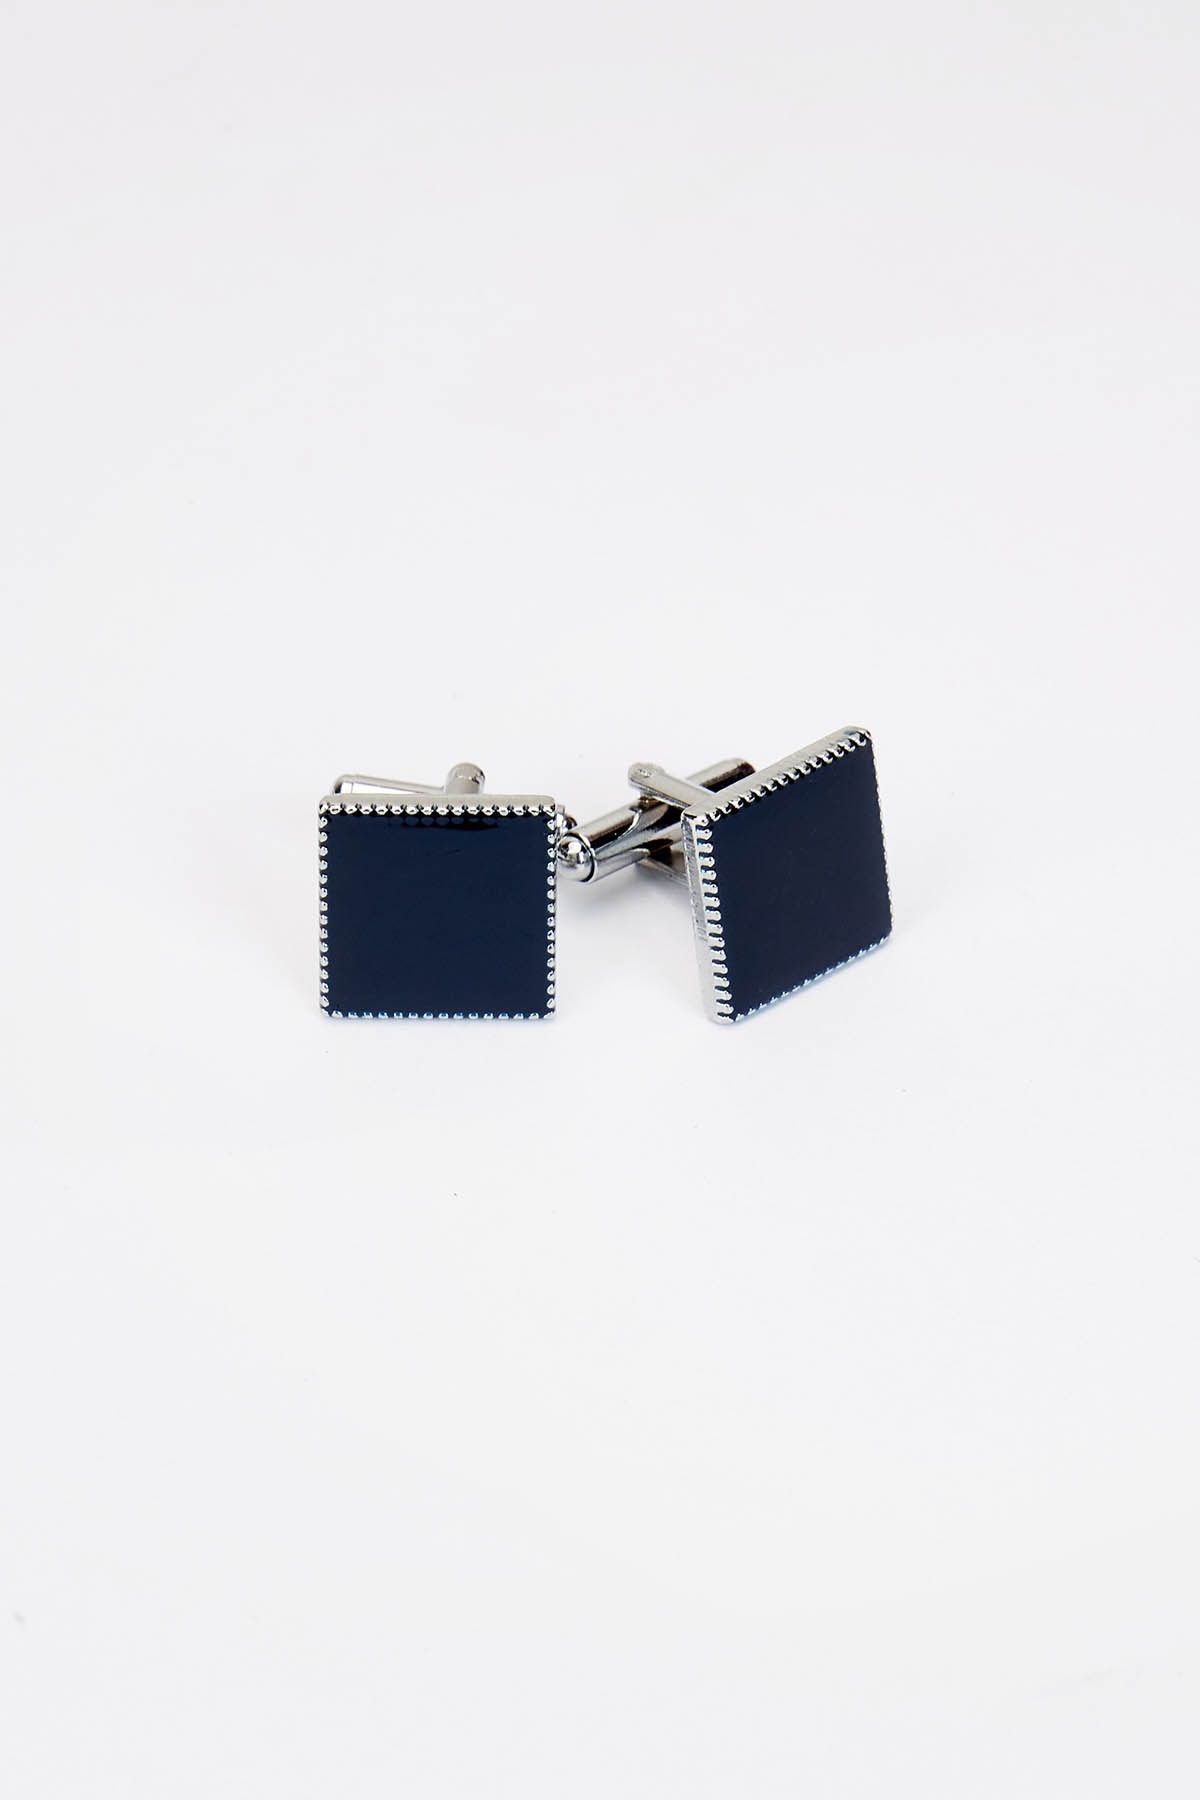 Patterned Navy Blue Cufflink